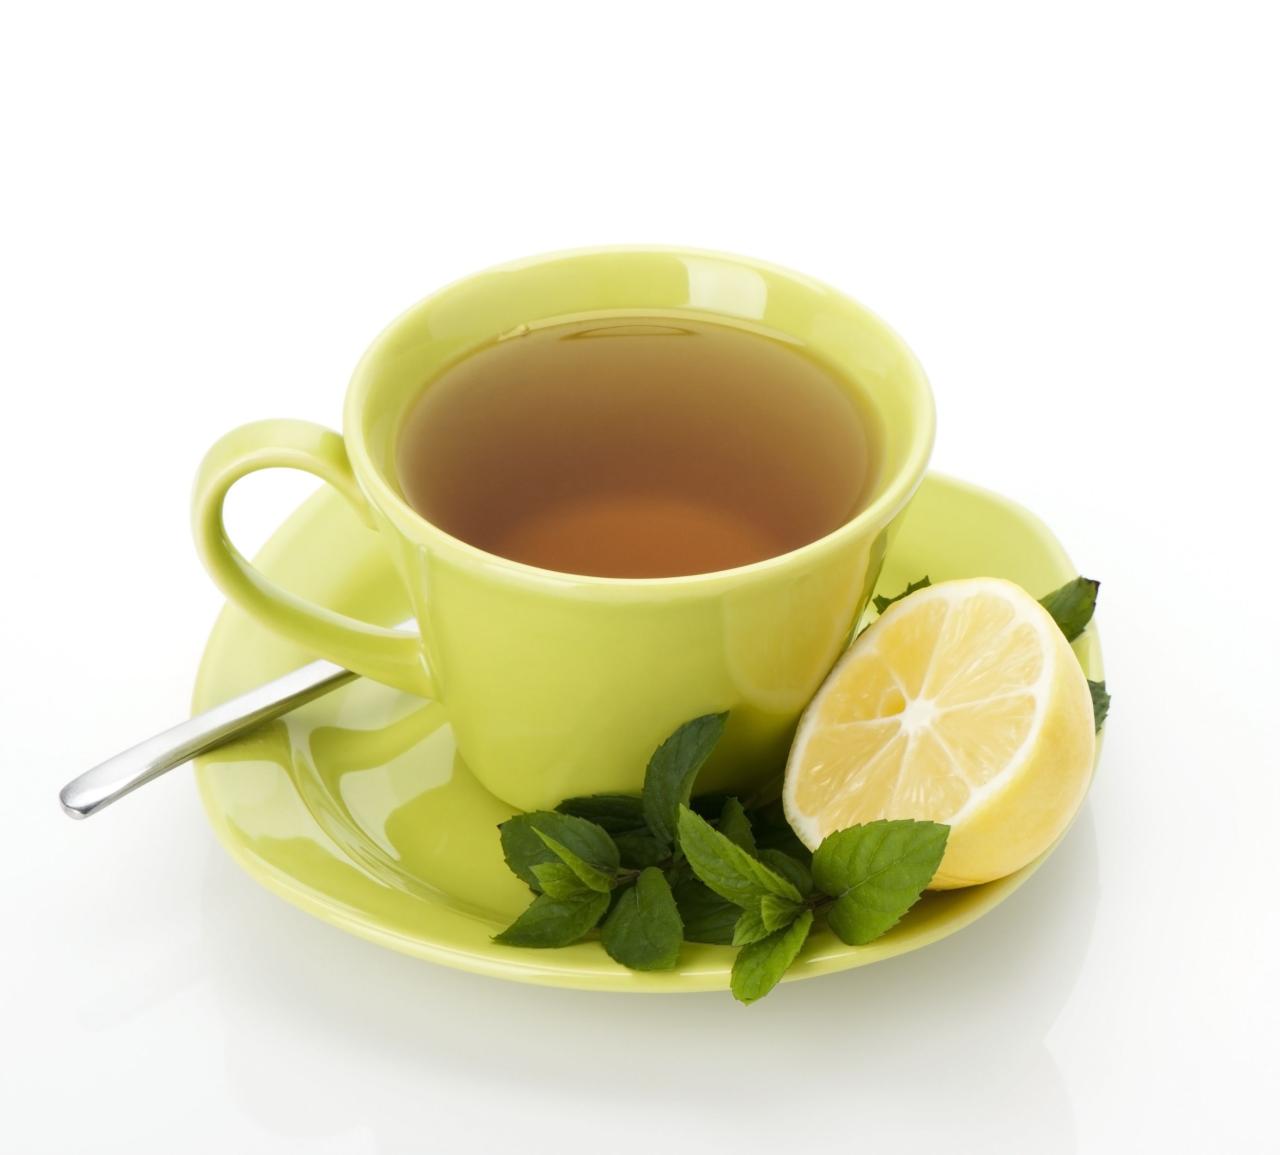 Ginger tea pain relief